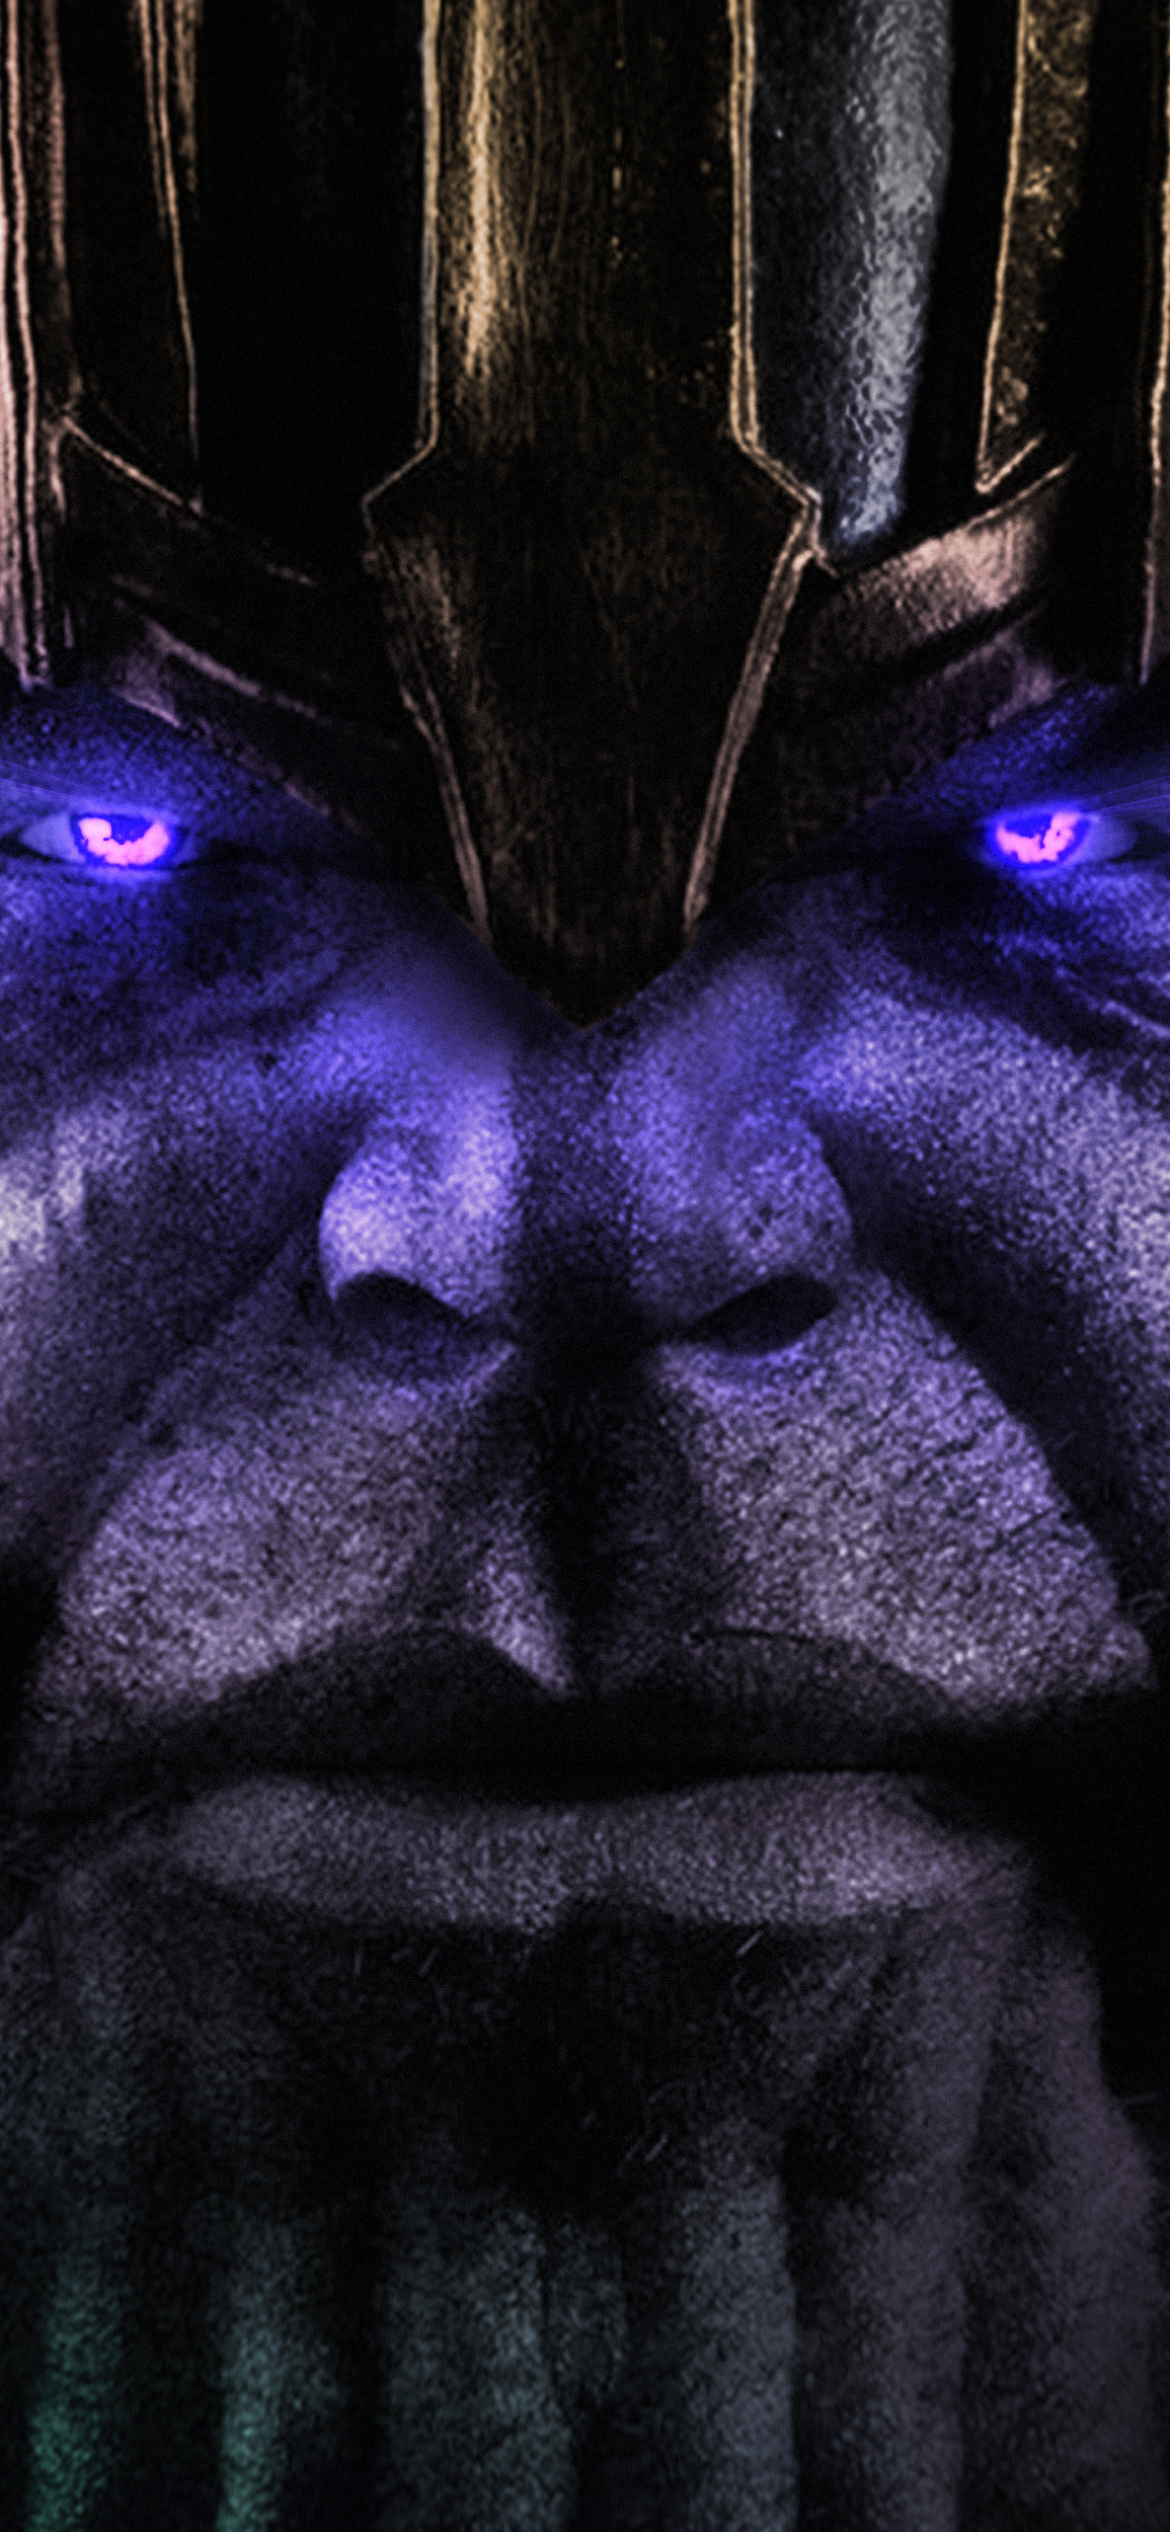 Avengers: Endgame Thanos PC Desktop 4K Wallpaper free Download